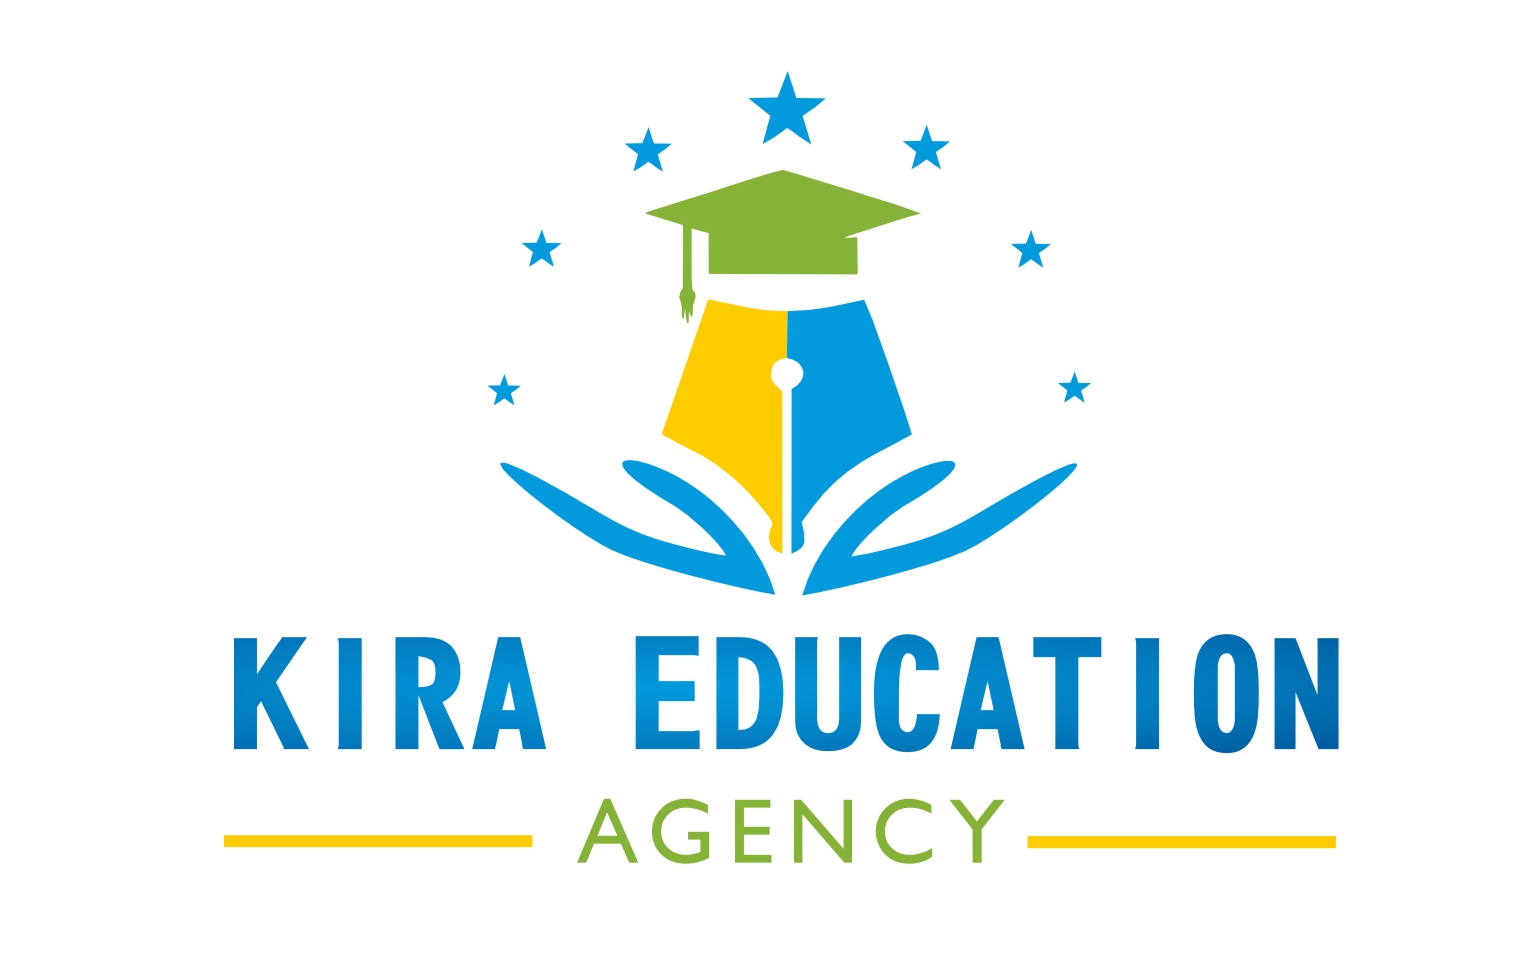 Kira Education Agency